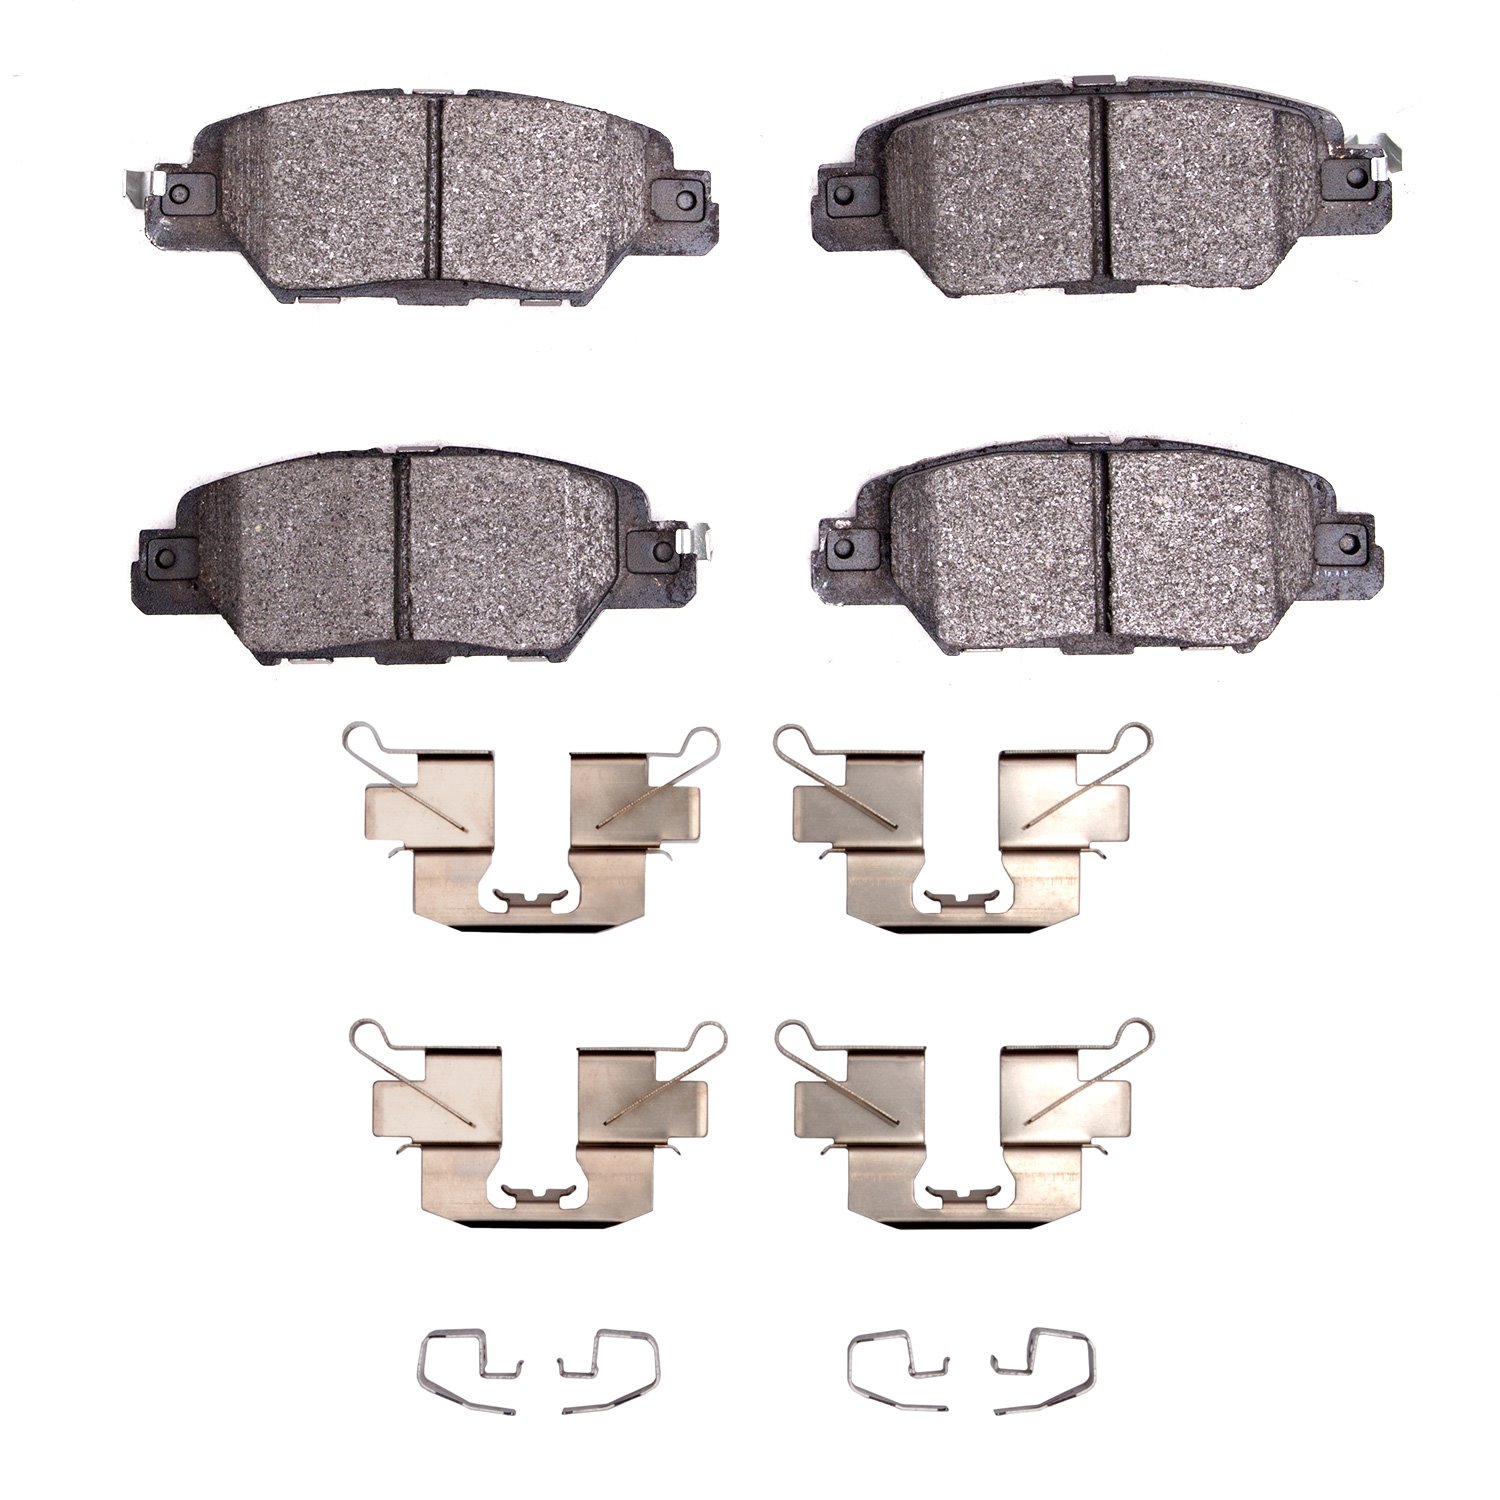 1551-1846-01 5000 Advanced Ceramic Brake Pads & Hardware Kit, Fits Select Ford/Lincoln/Mercury/Mazda, Position: Rear